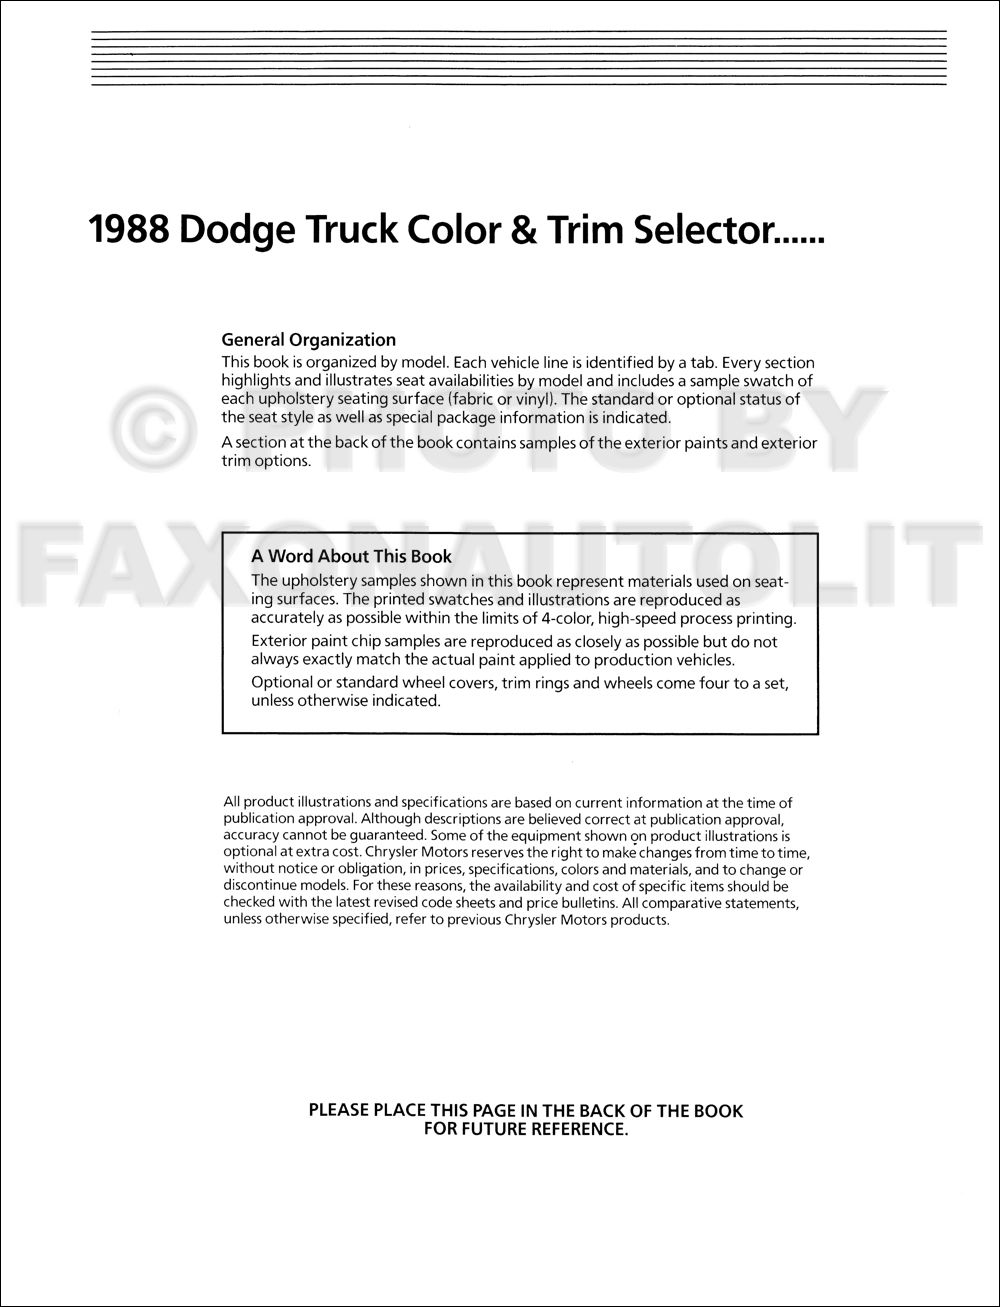 1988 dodge truck colors